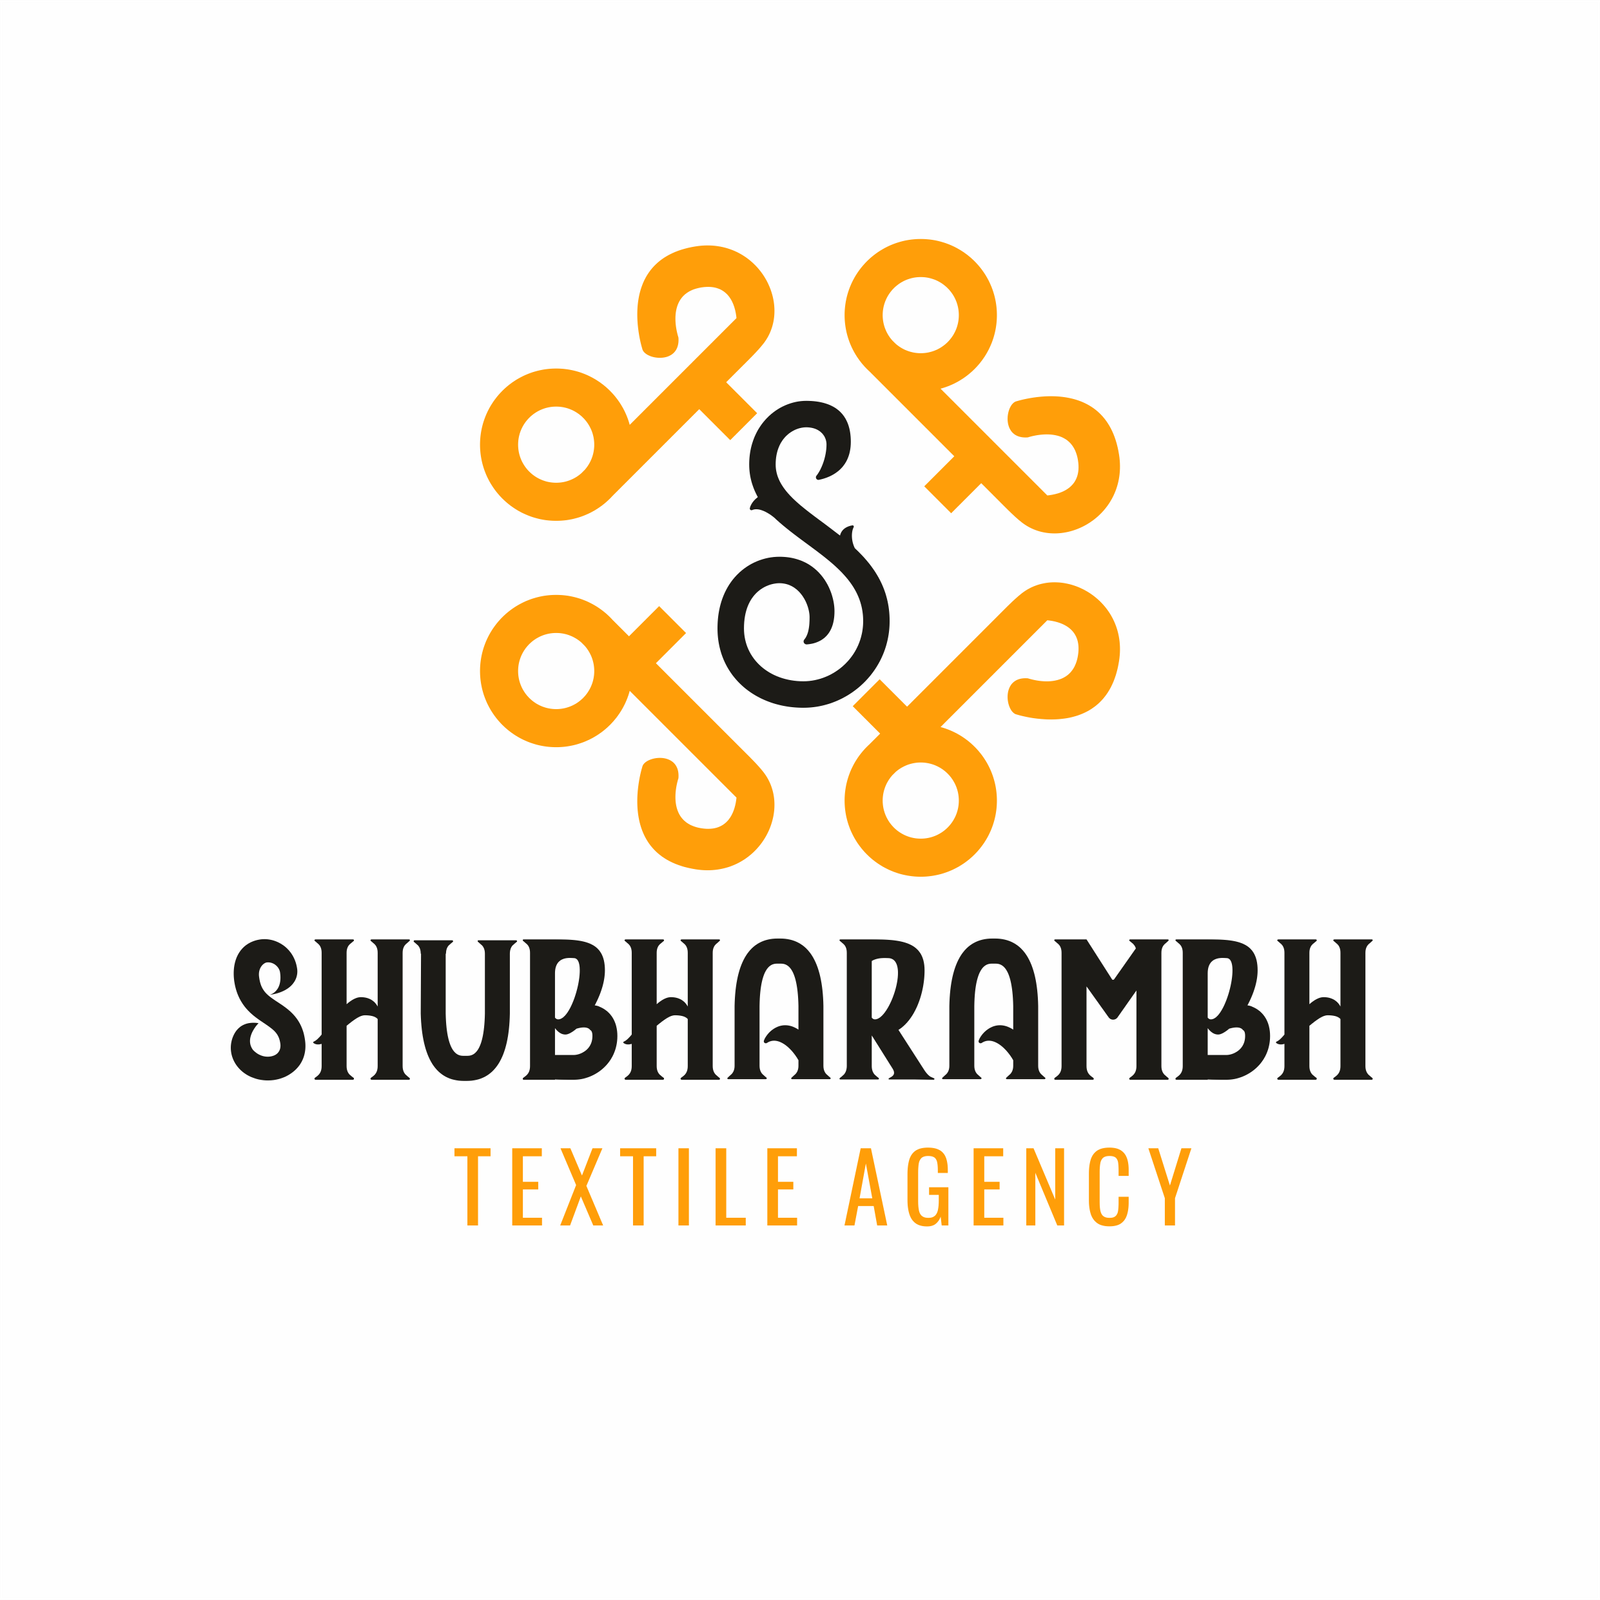 Shubharambh logo set in new hindi calligraphy font, Translation of non  english word is - New Beginning Stock Illustration | Adobe Stock